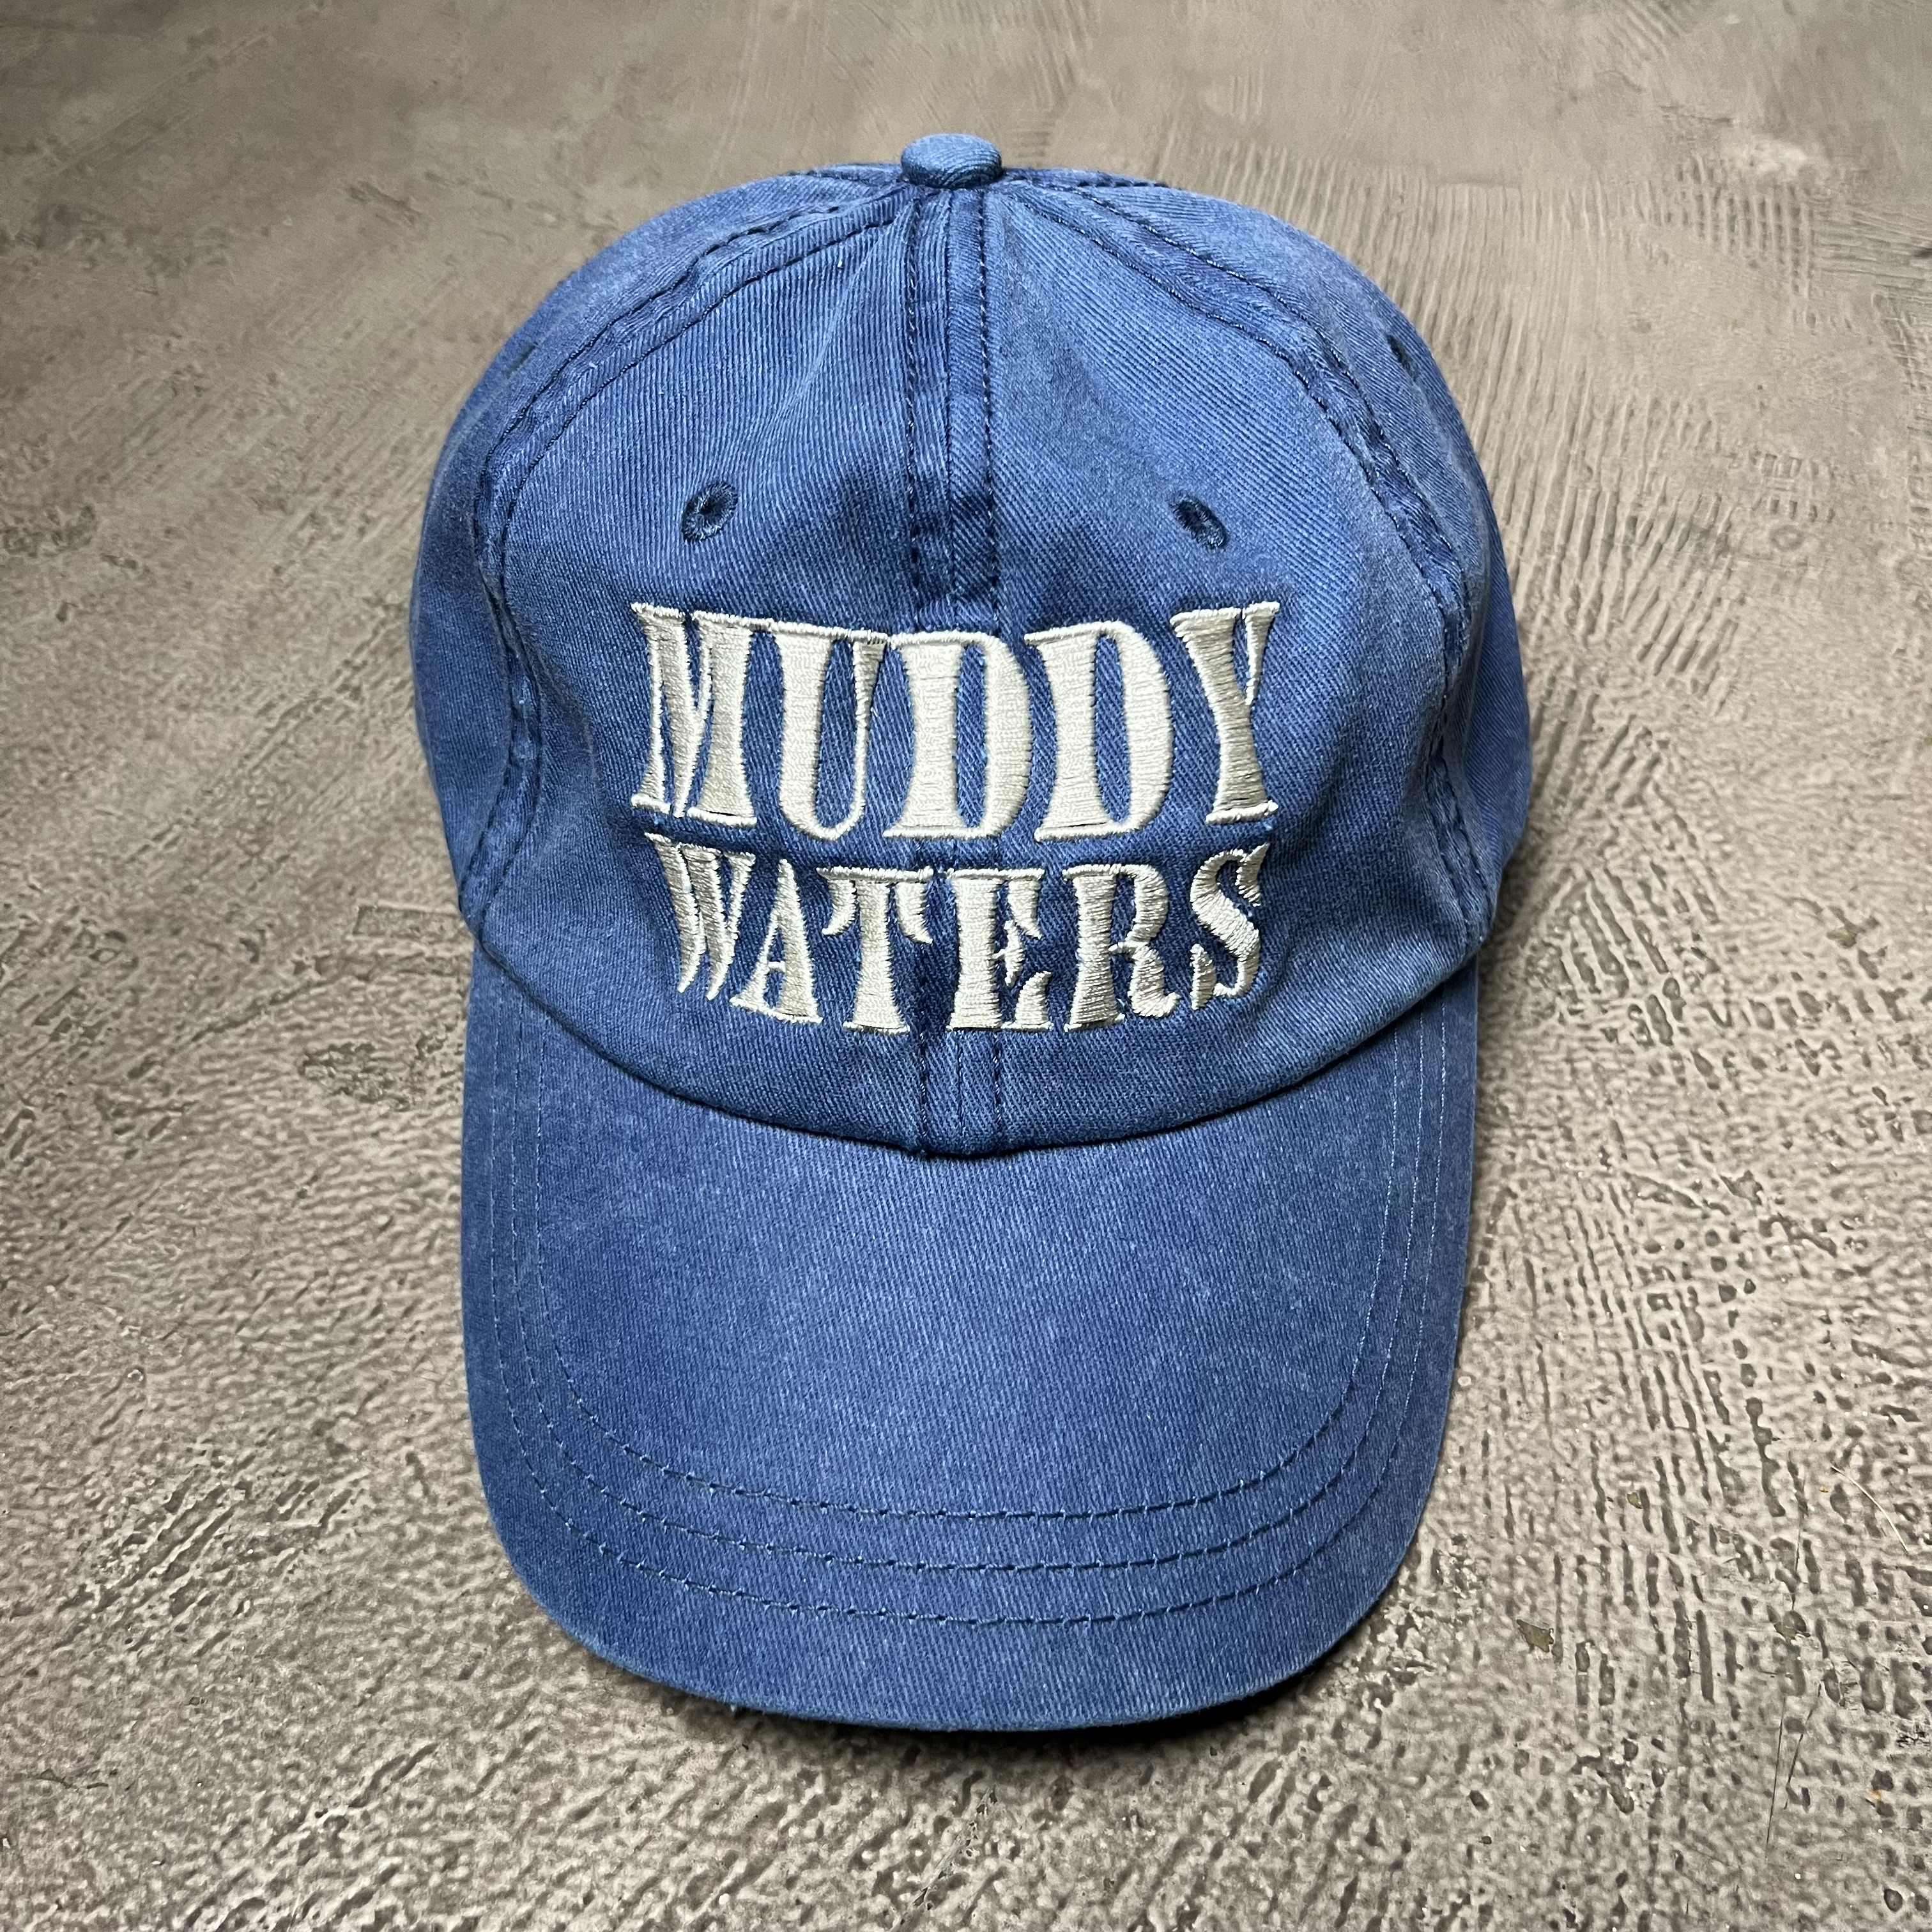 "MUDDY WATERS" Hat